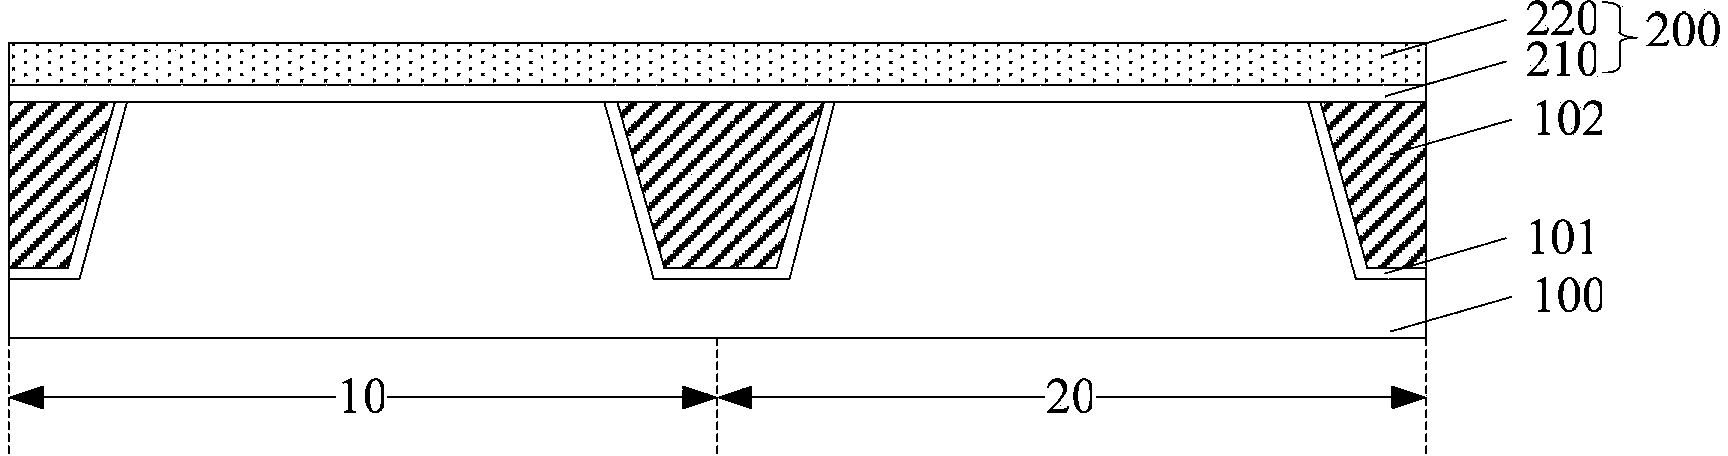 Forming method of transistor